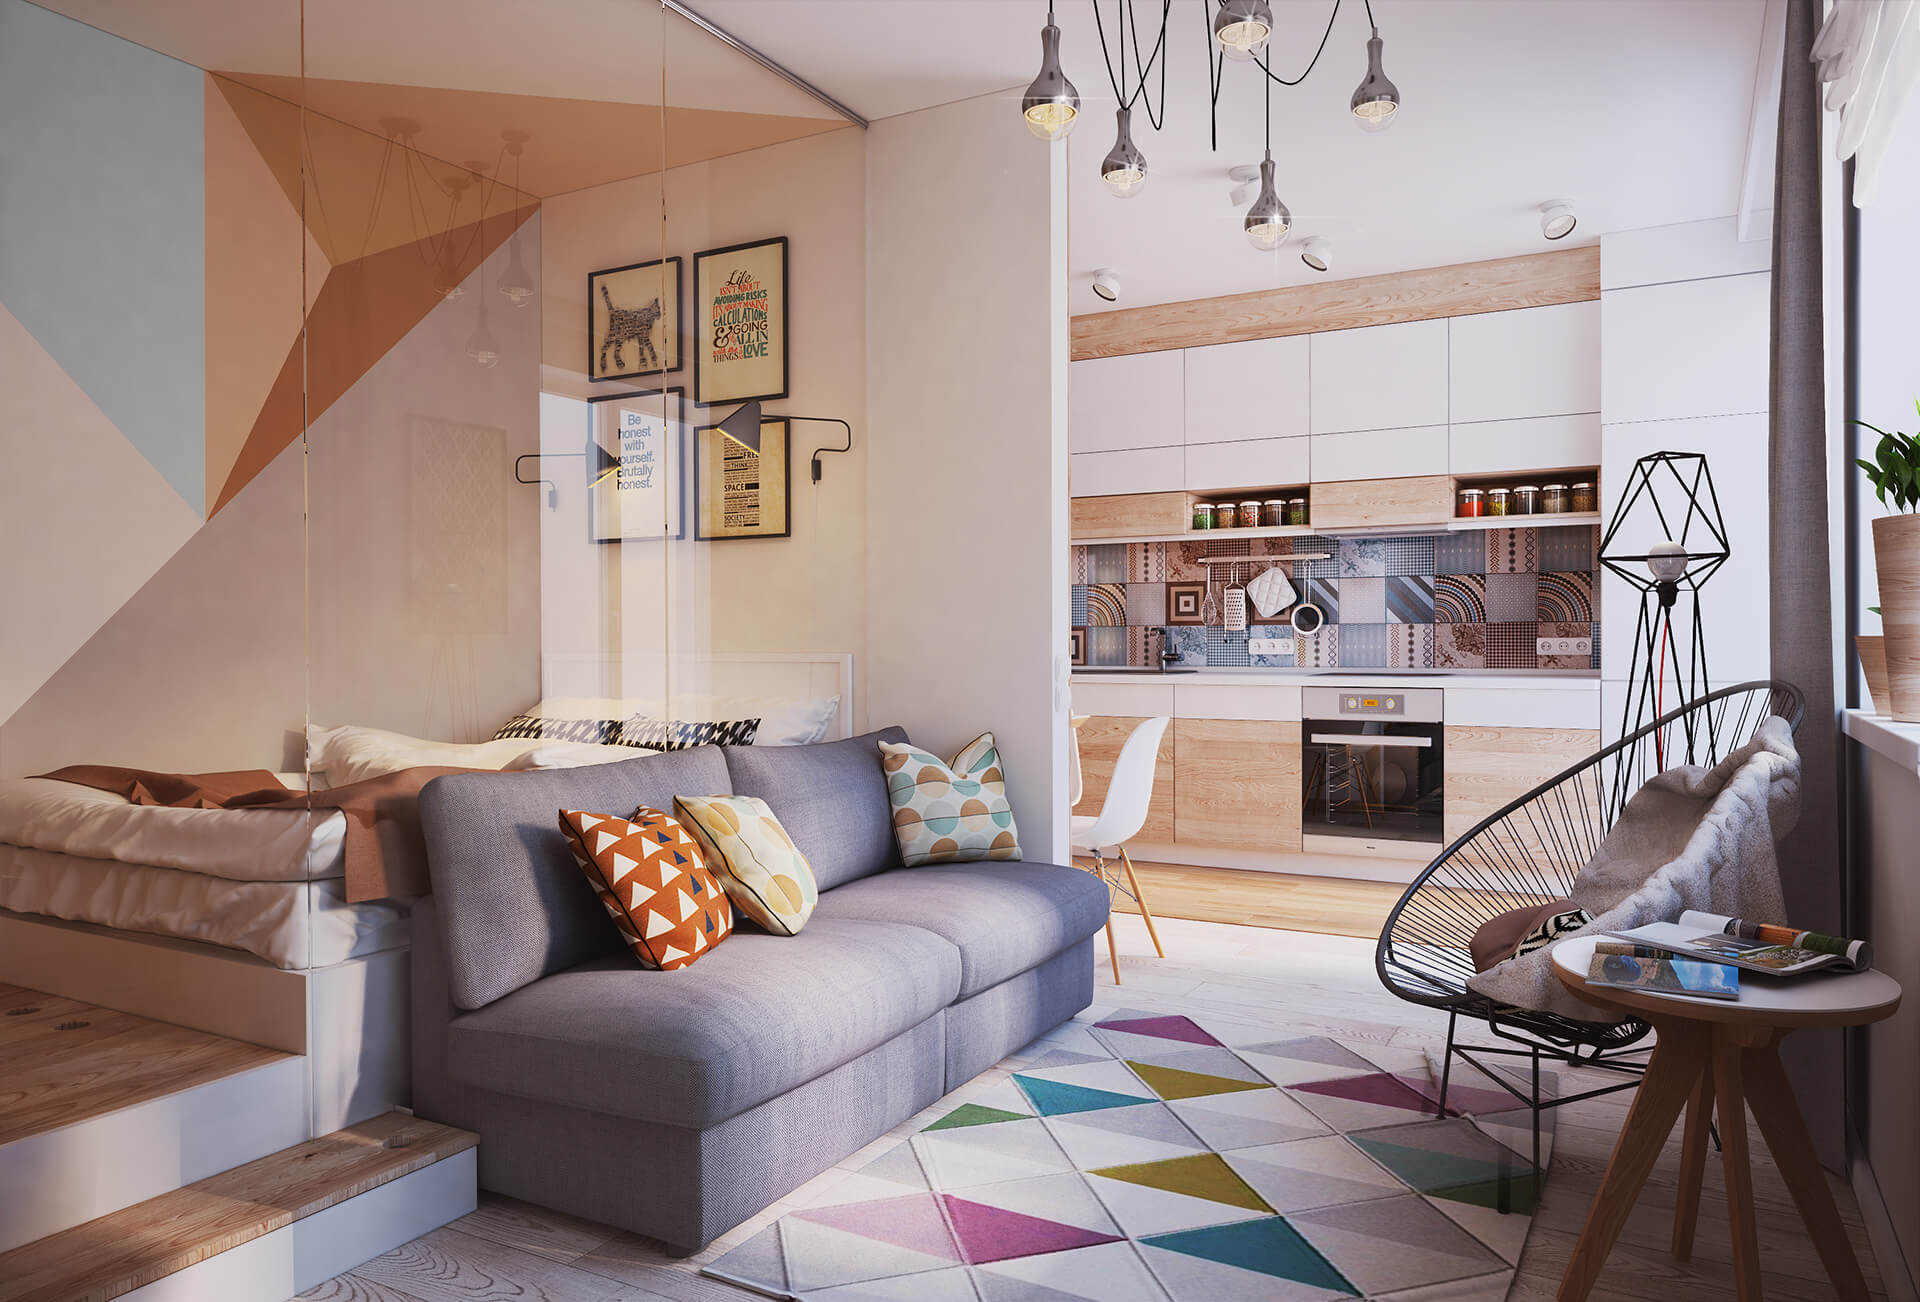 10 Easy To Follow Design Ideas For Small Apartments – Adorable